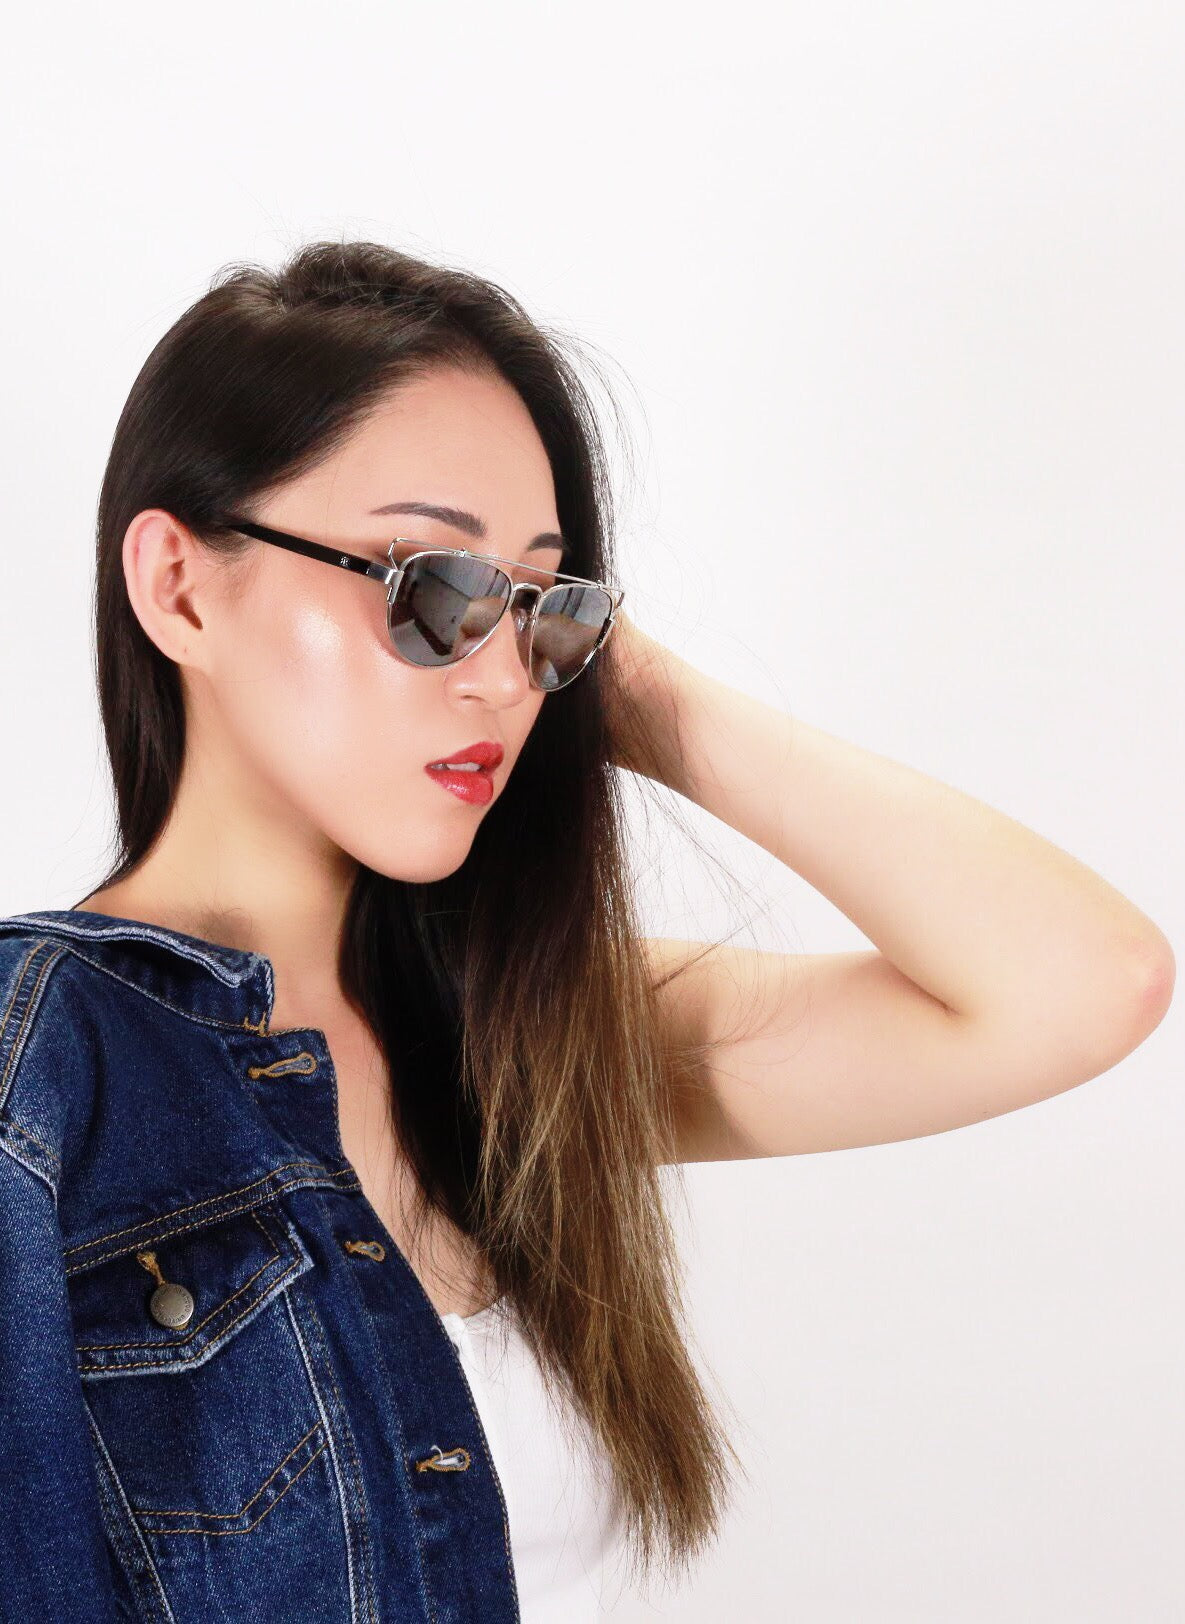 Asian girl with raised arm wears Elenur sunglasses